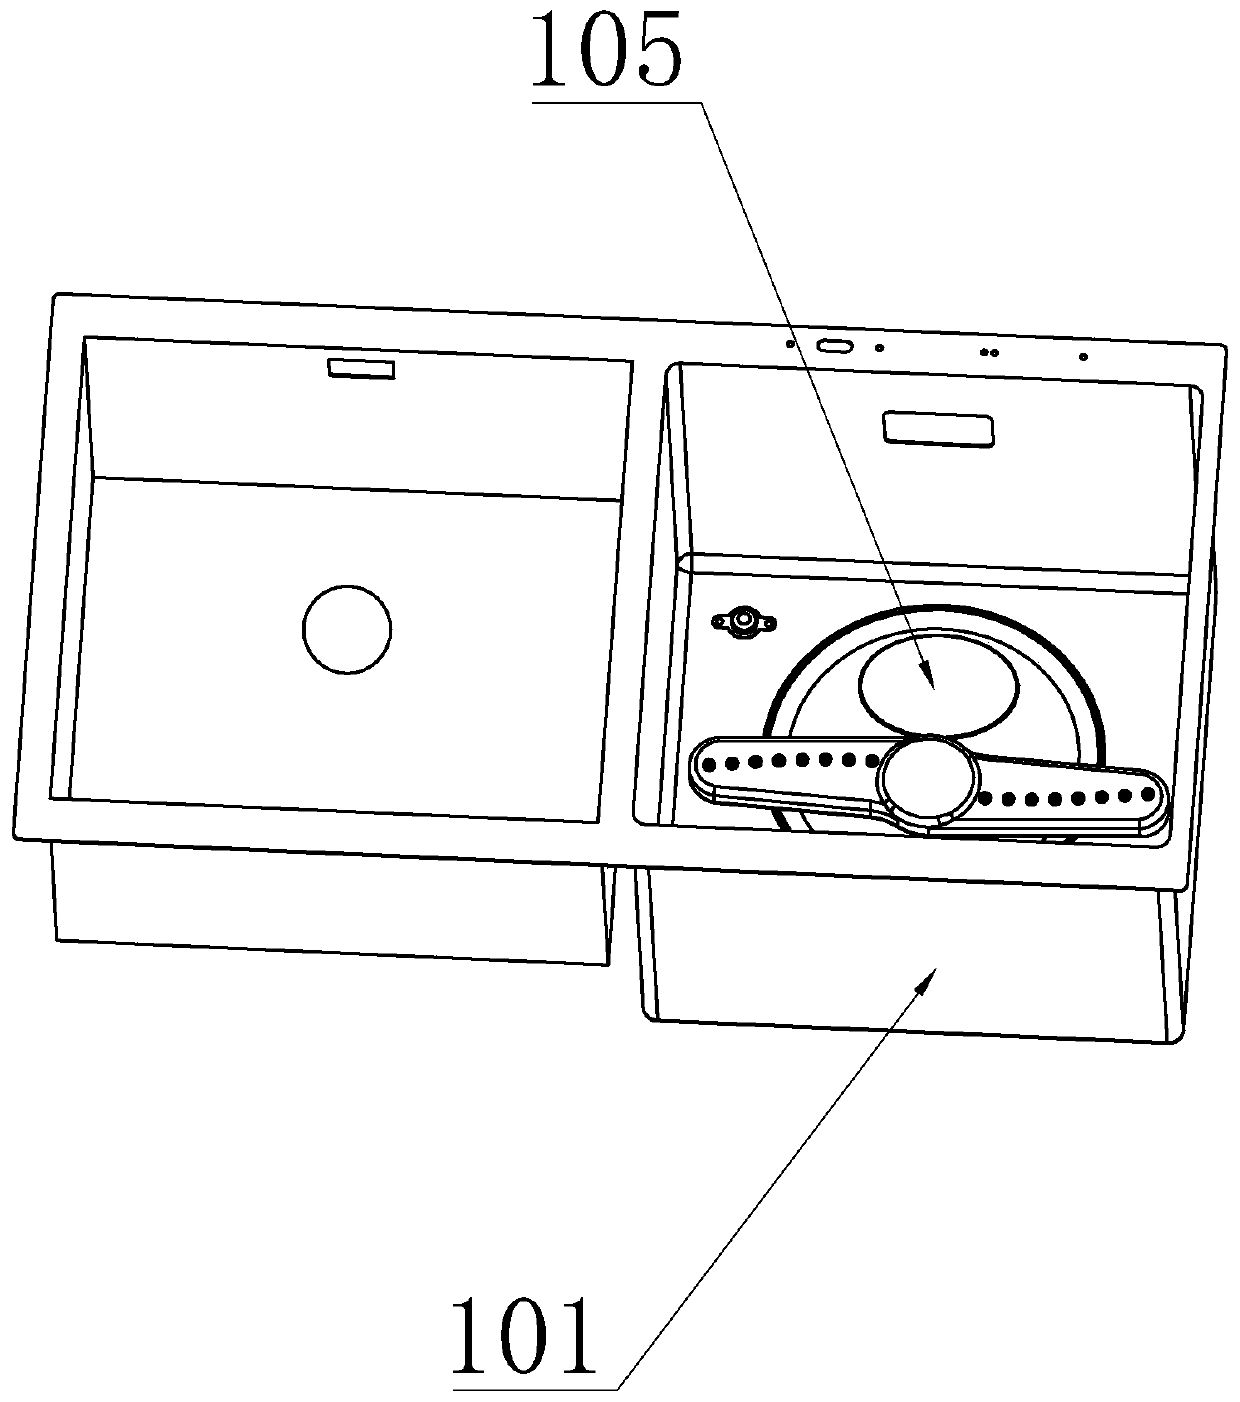 Control method of garbage breaker for sink dishwasher